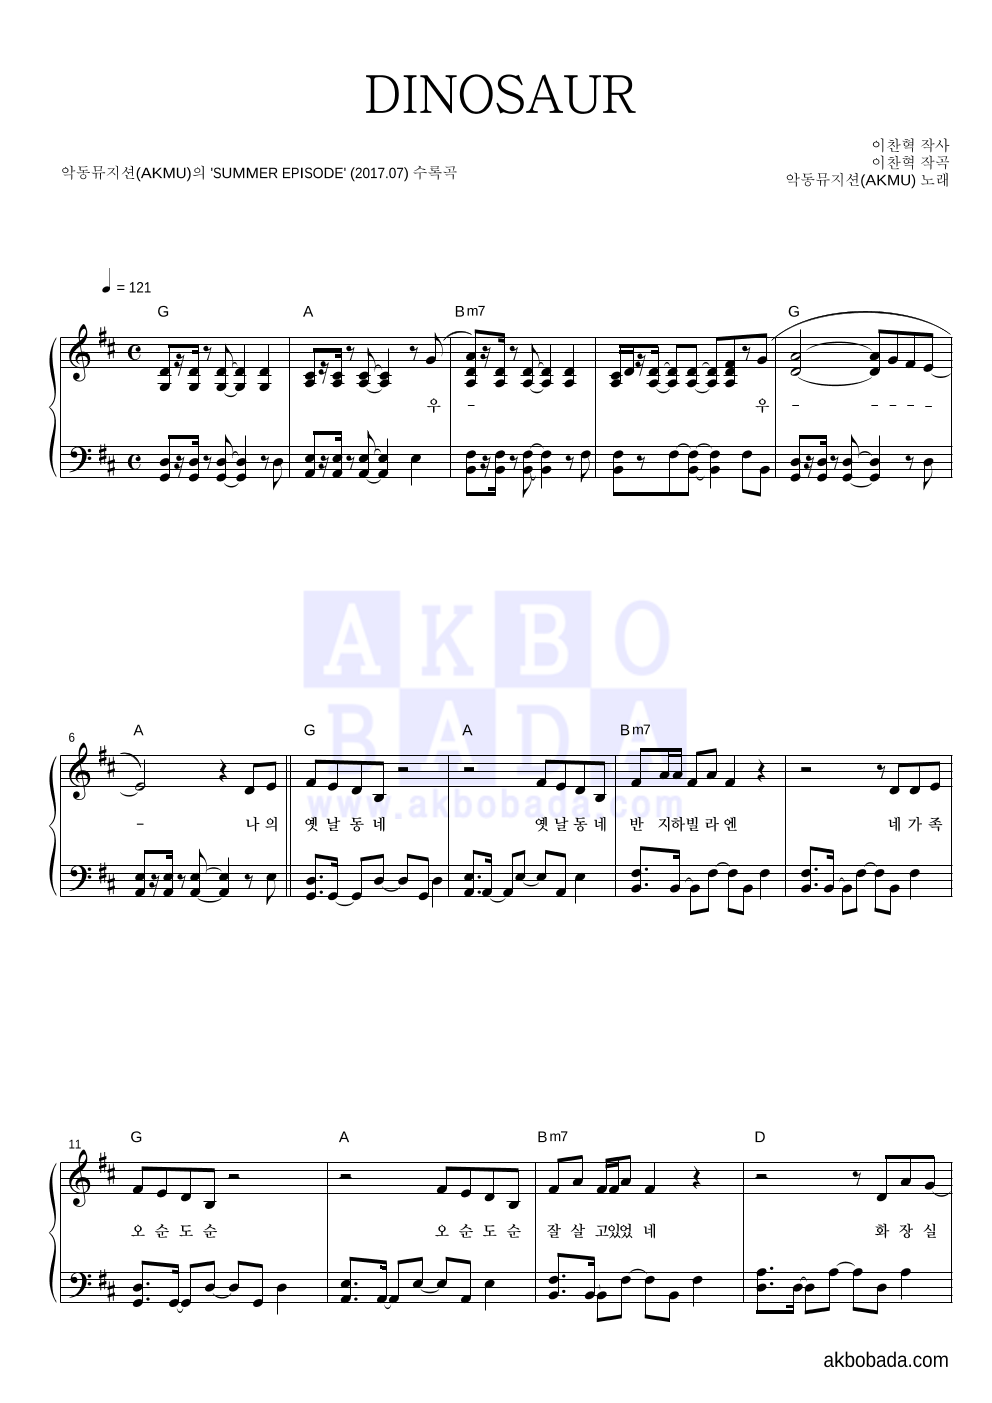 AKMU(악뮤) - DINOSAUR 피아노 2단 악보 